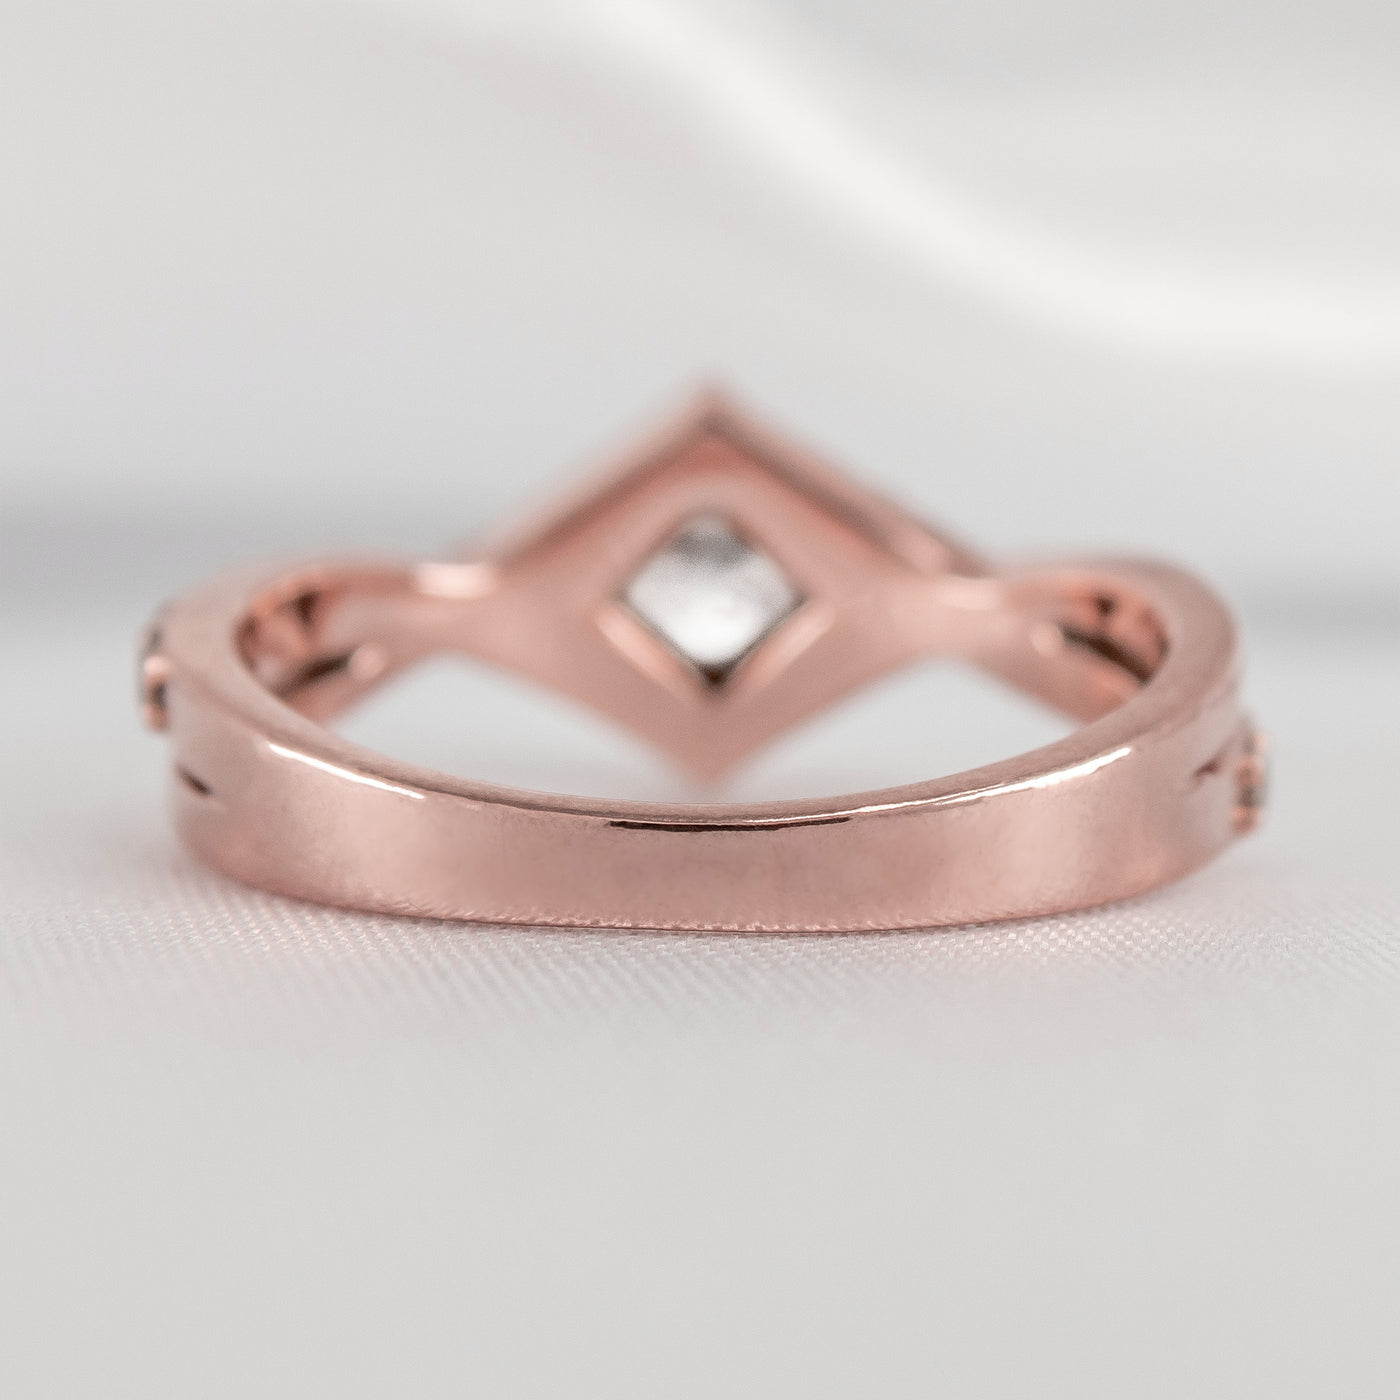 The Oakley Twist Princess Cut .091 Carat Diamond Engagement Ring - Lisa Robin